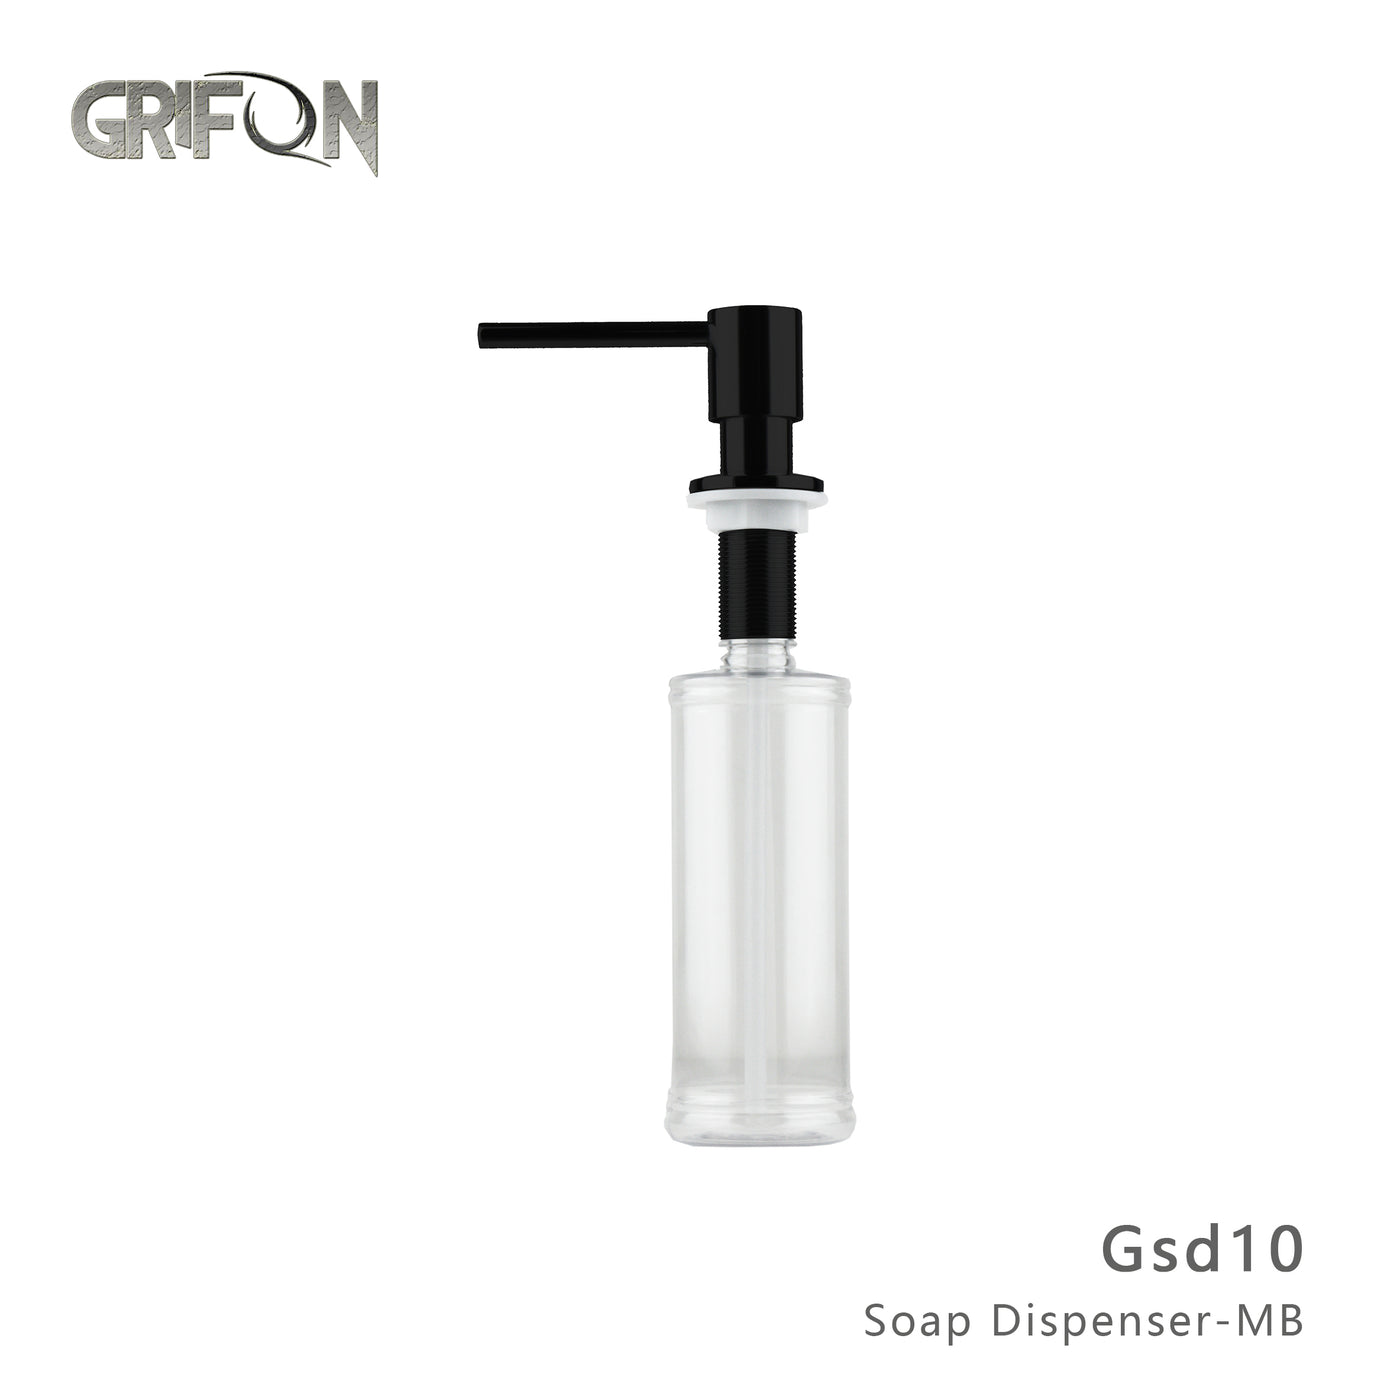 SOAP DISPENSER - GSD10 Kitchen Soap and Lotion Dispenser in Black Stainless Steel